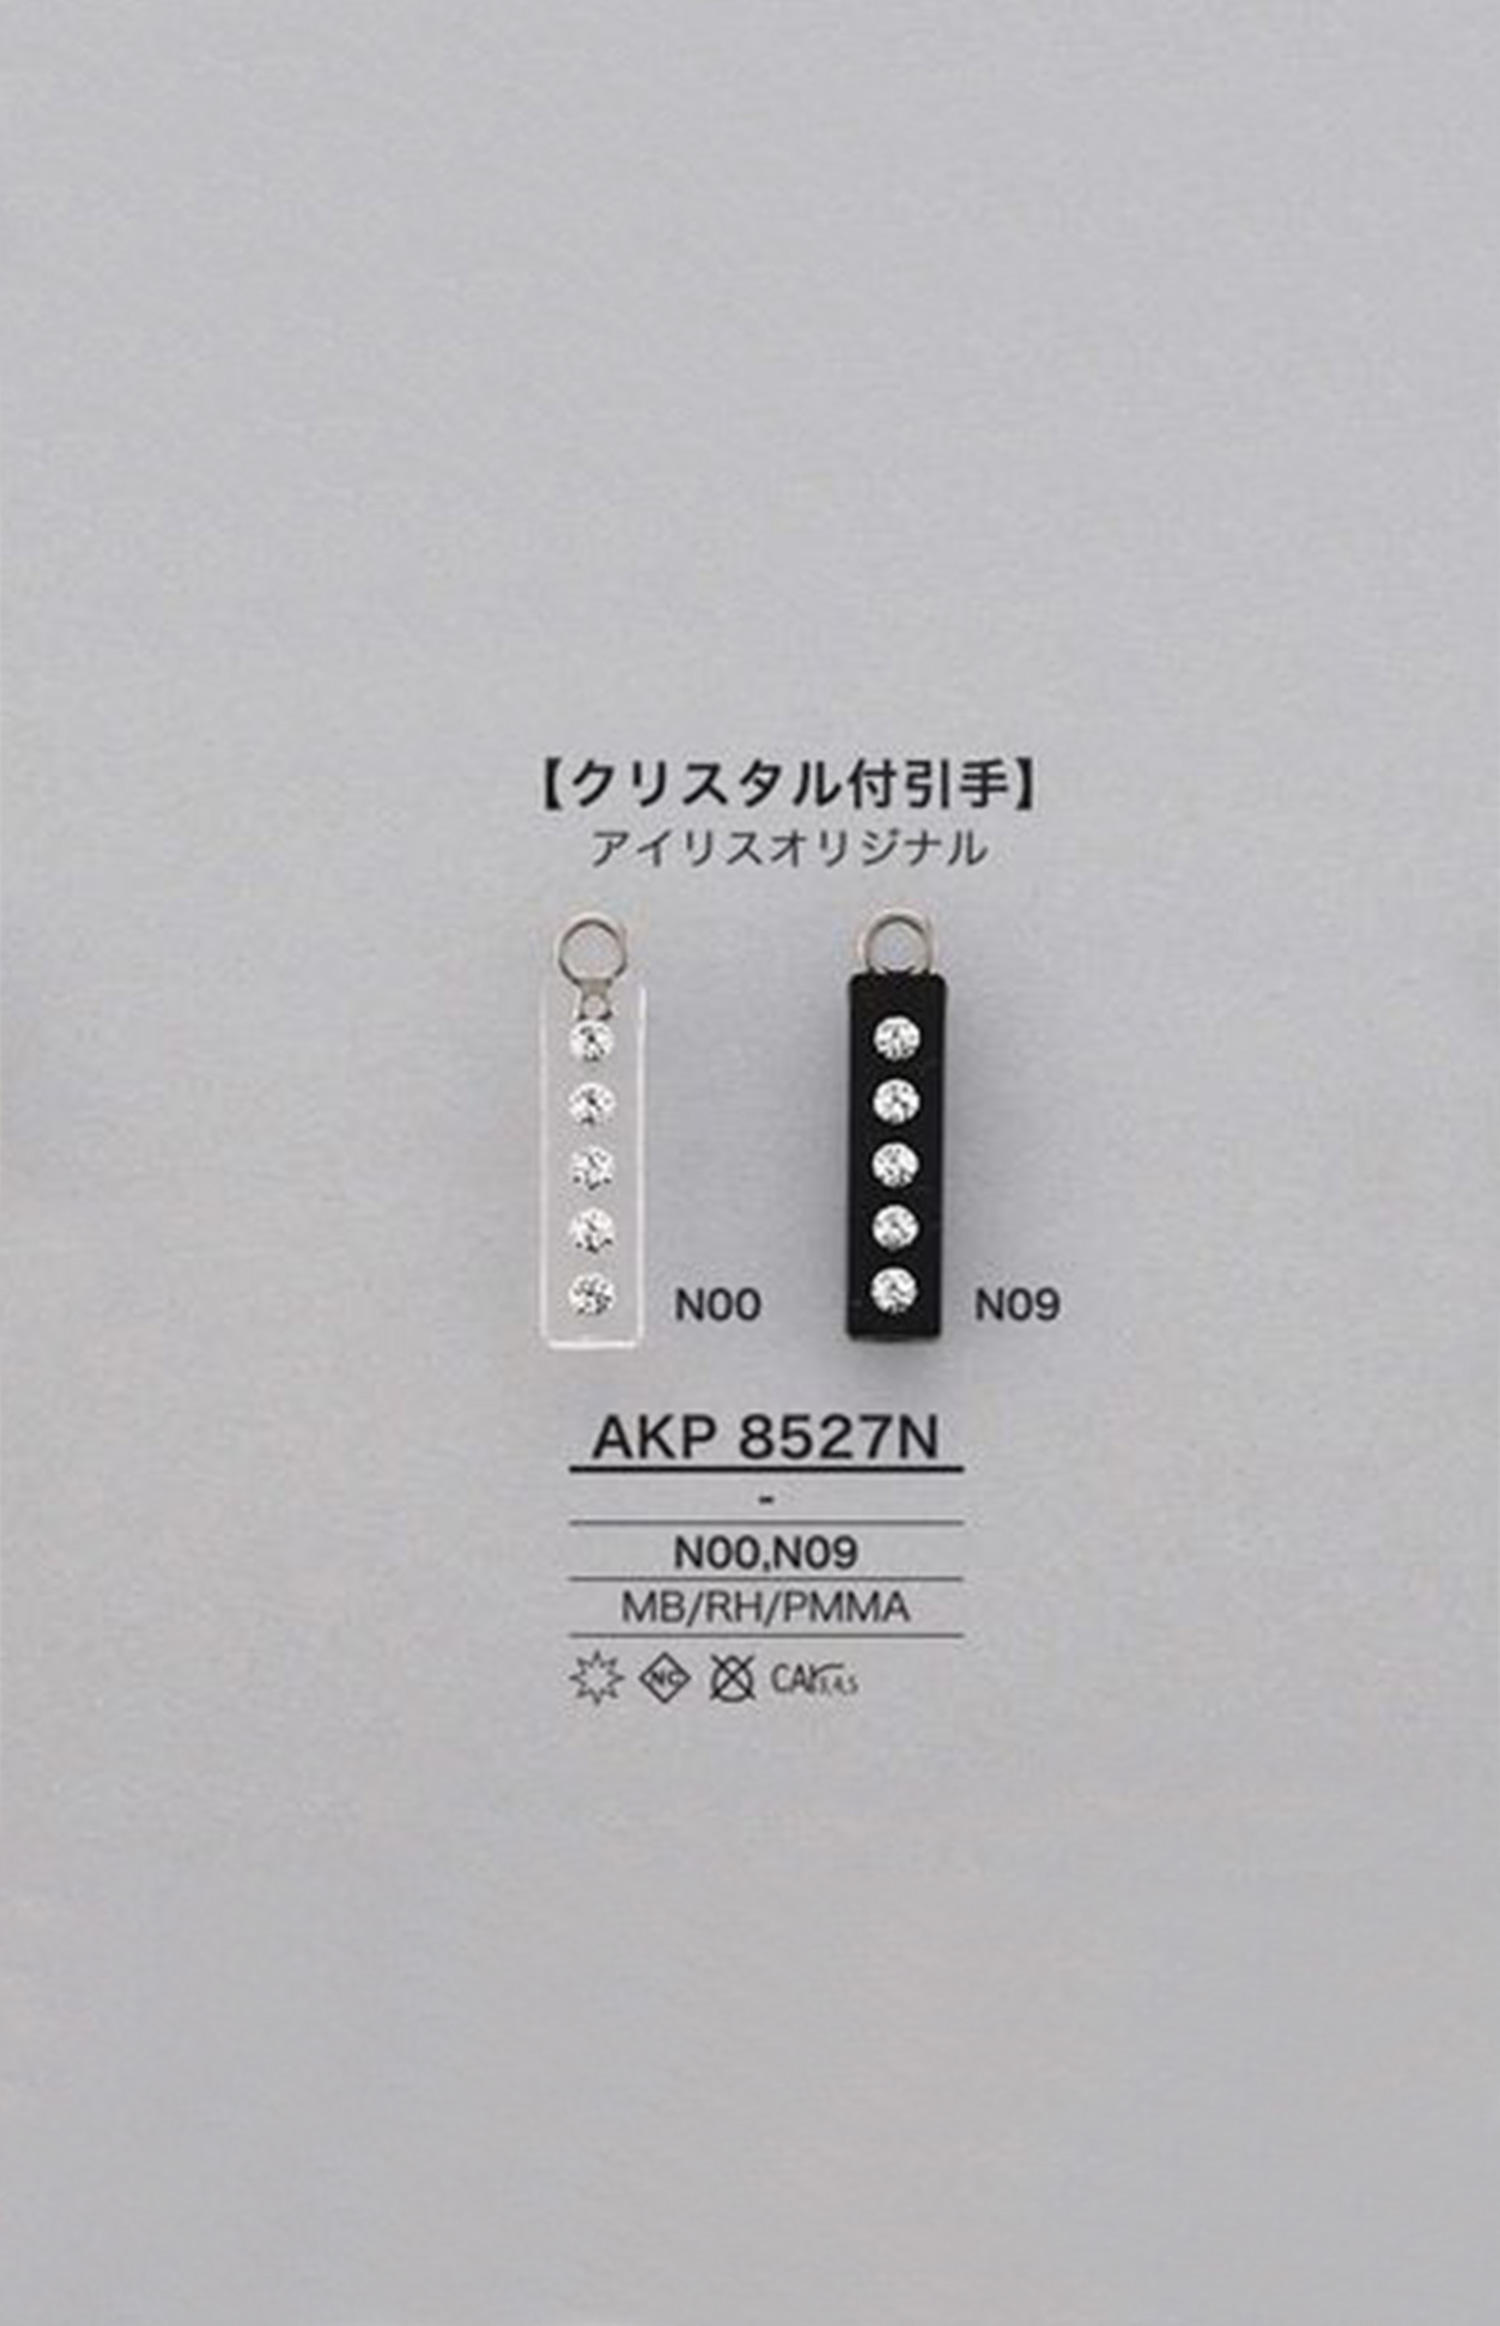 AKP8527N Zipper Point With Crystal (Pull Tab) IRIS